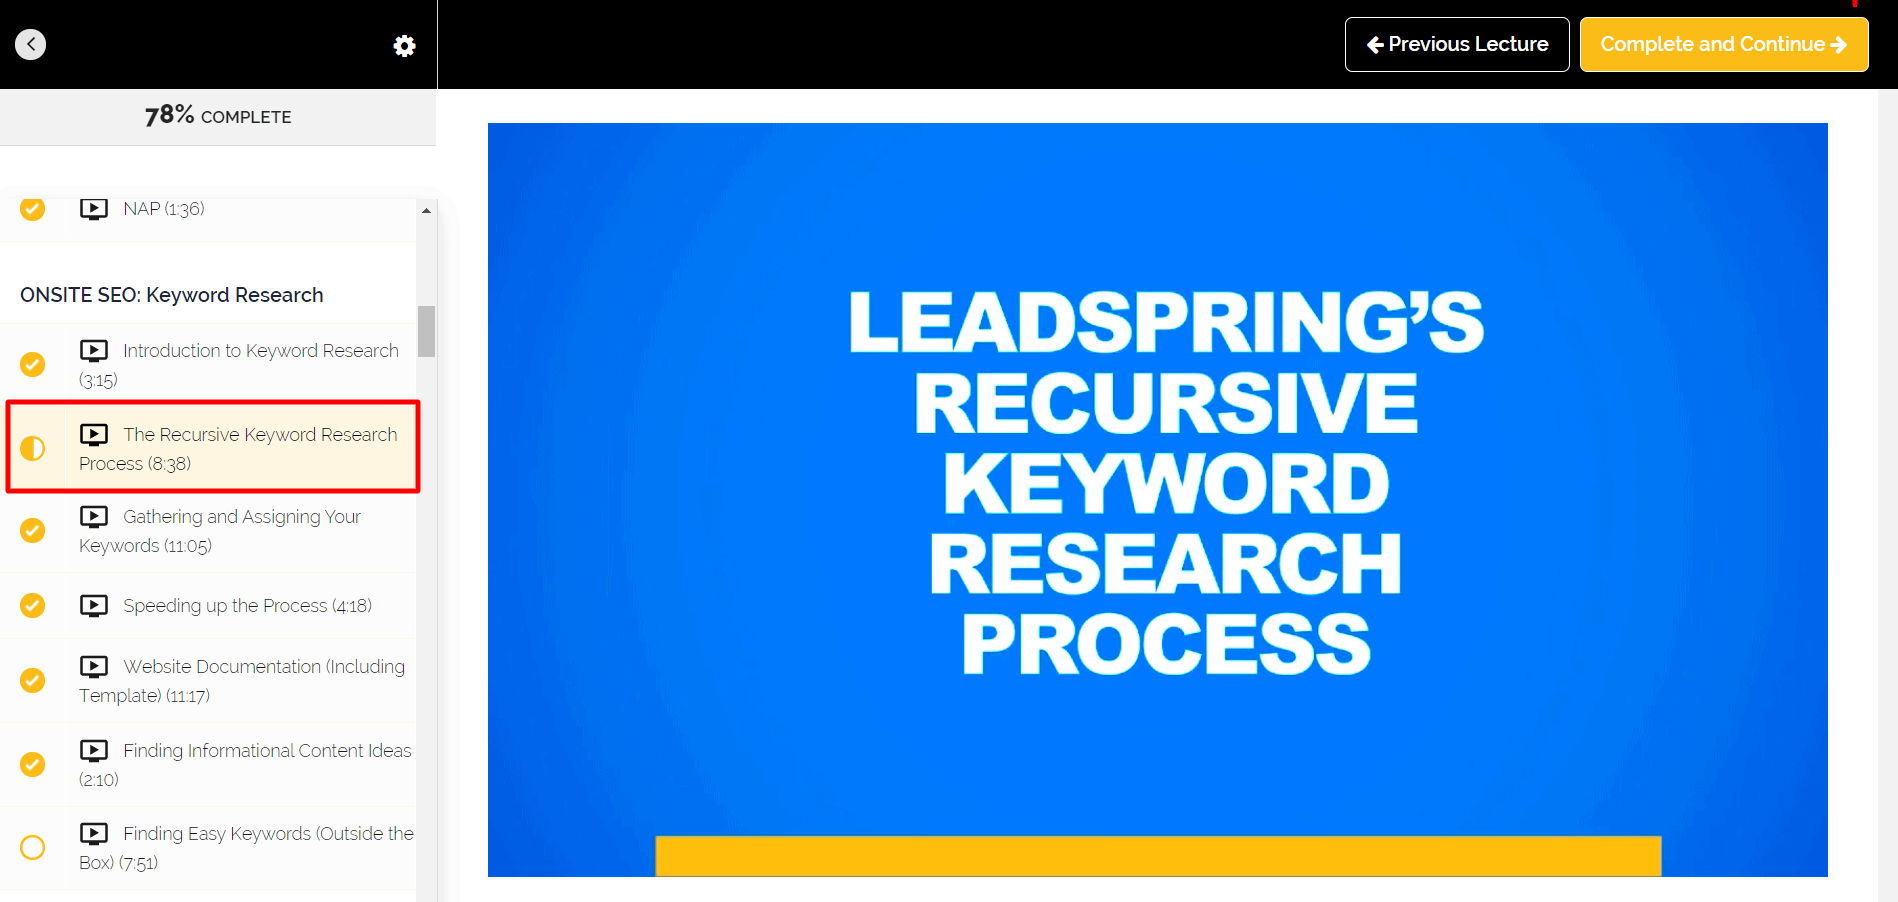 The Recursive Keyword Research Process